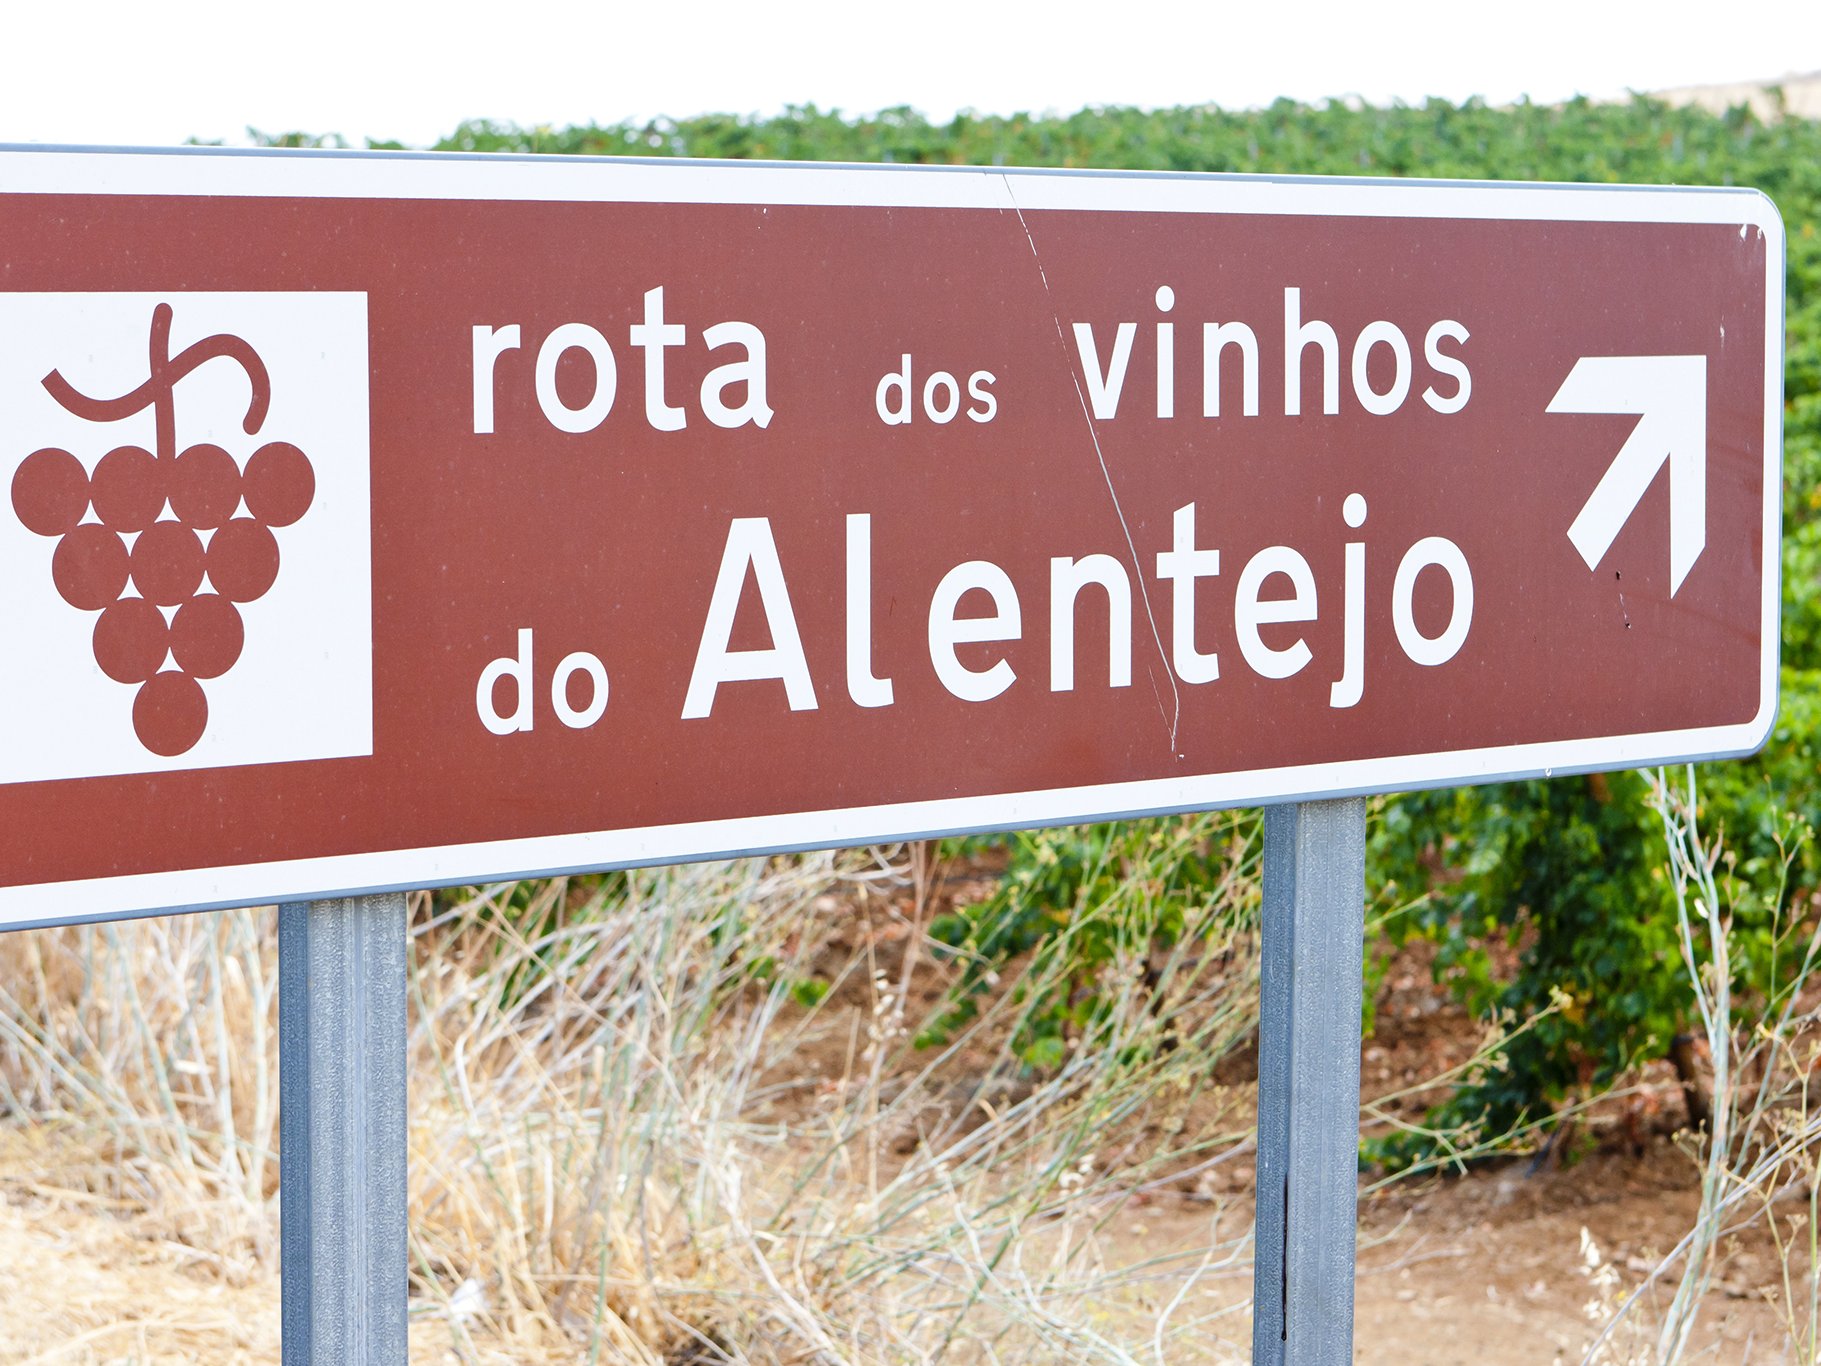 Alentejo wine region, Portugal.